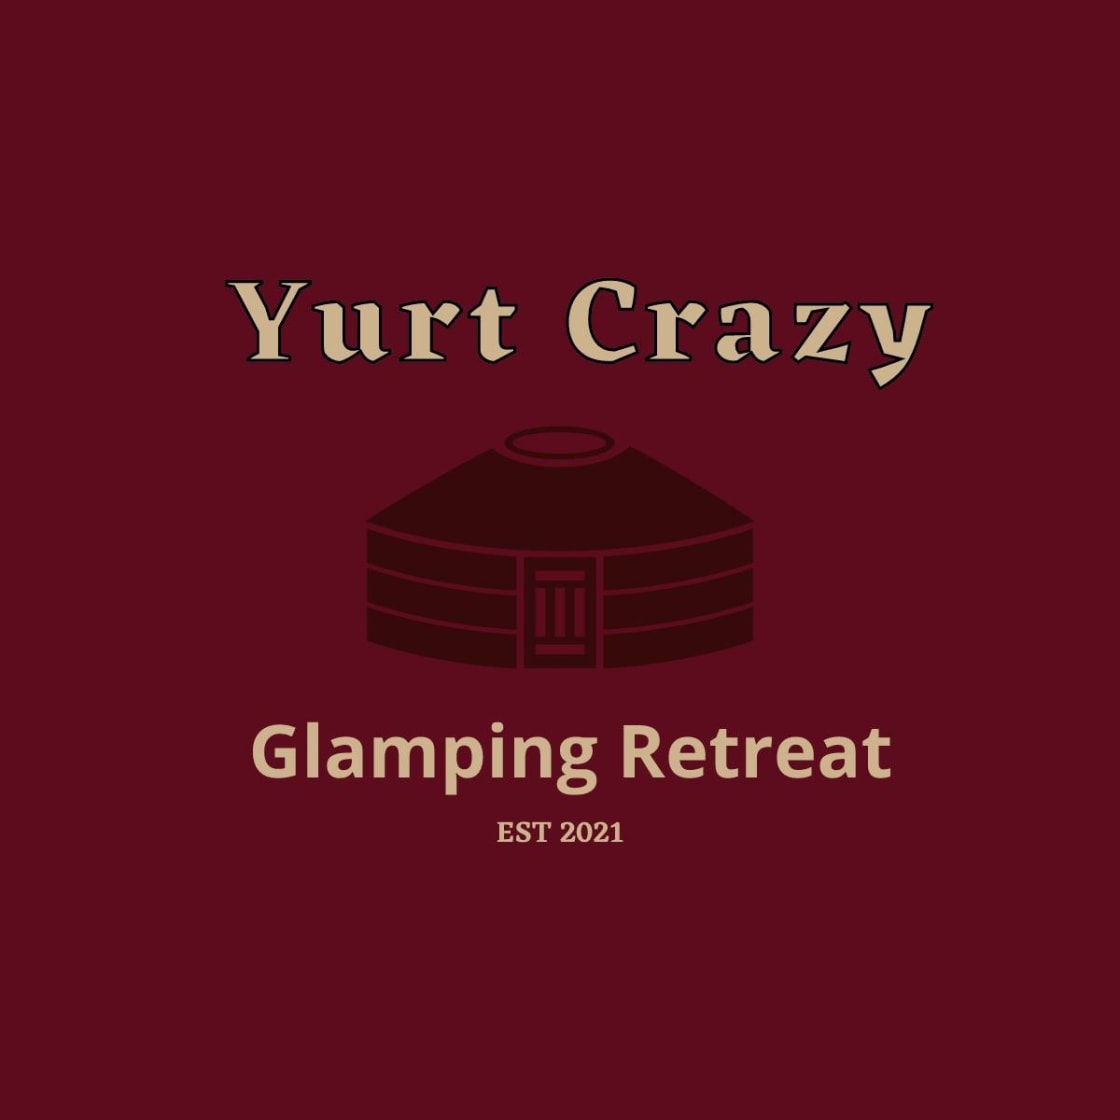 Yurt Crazy